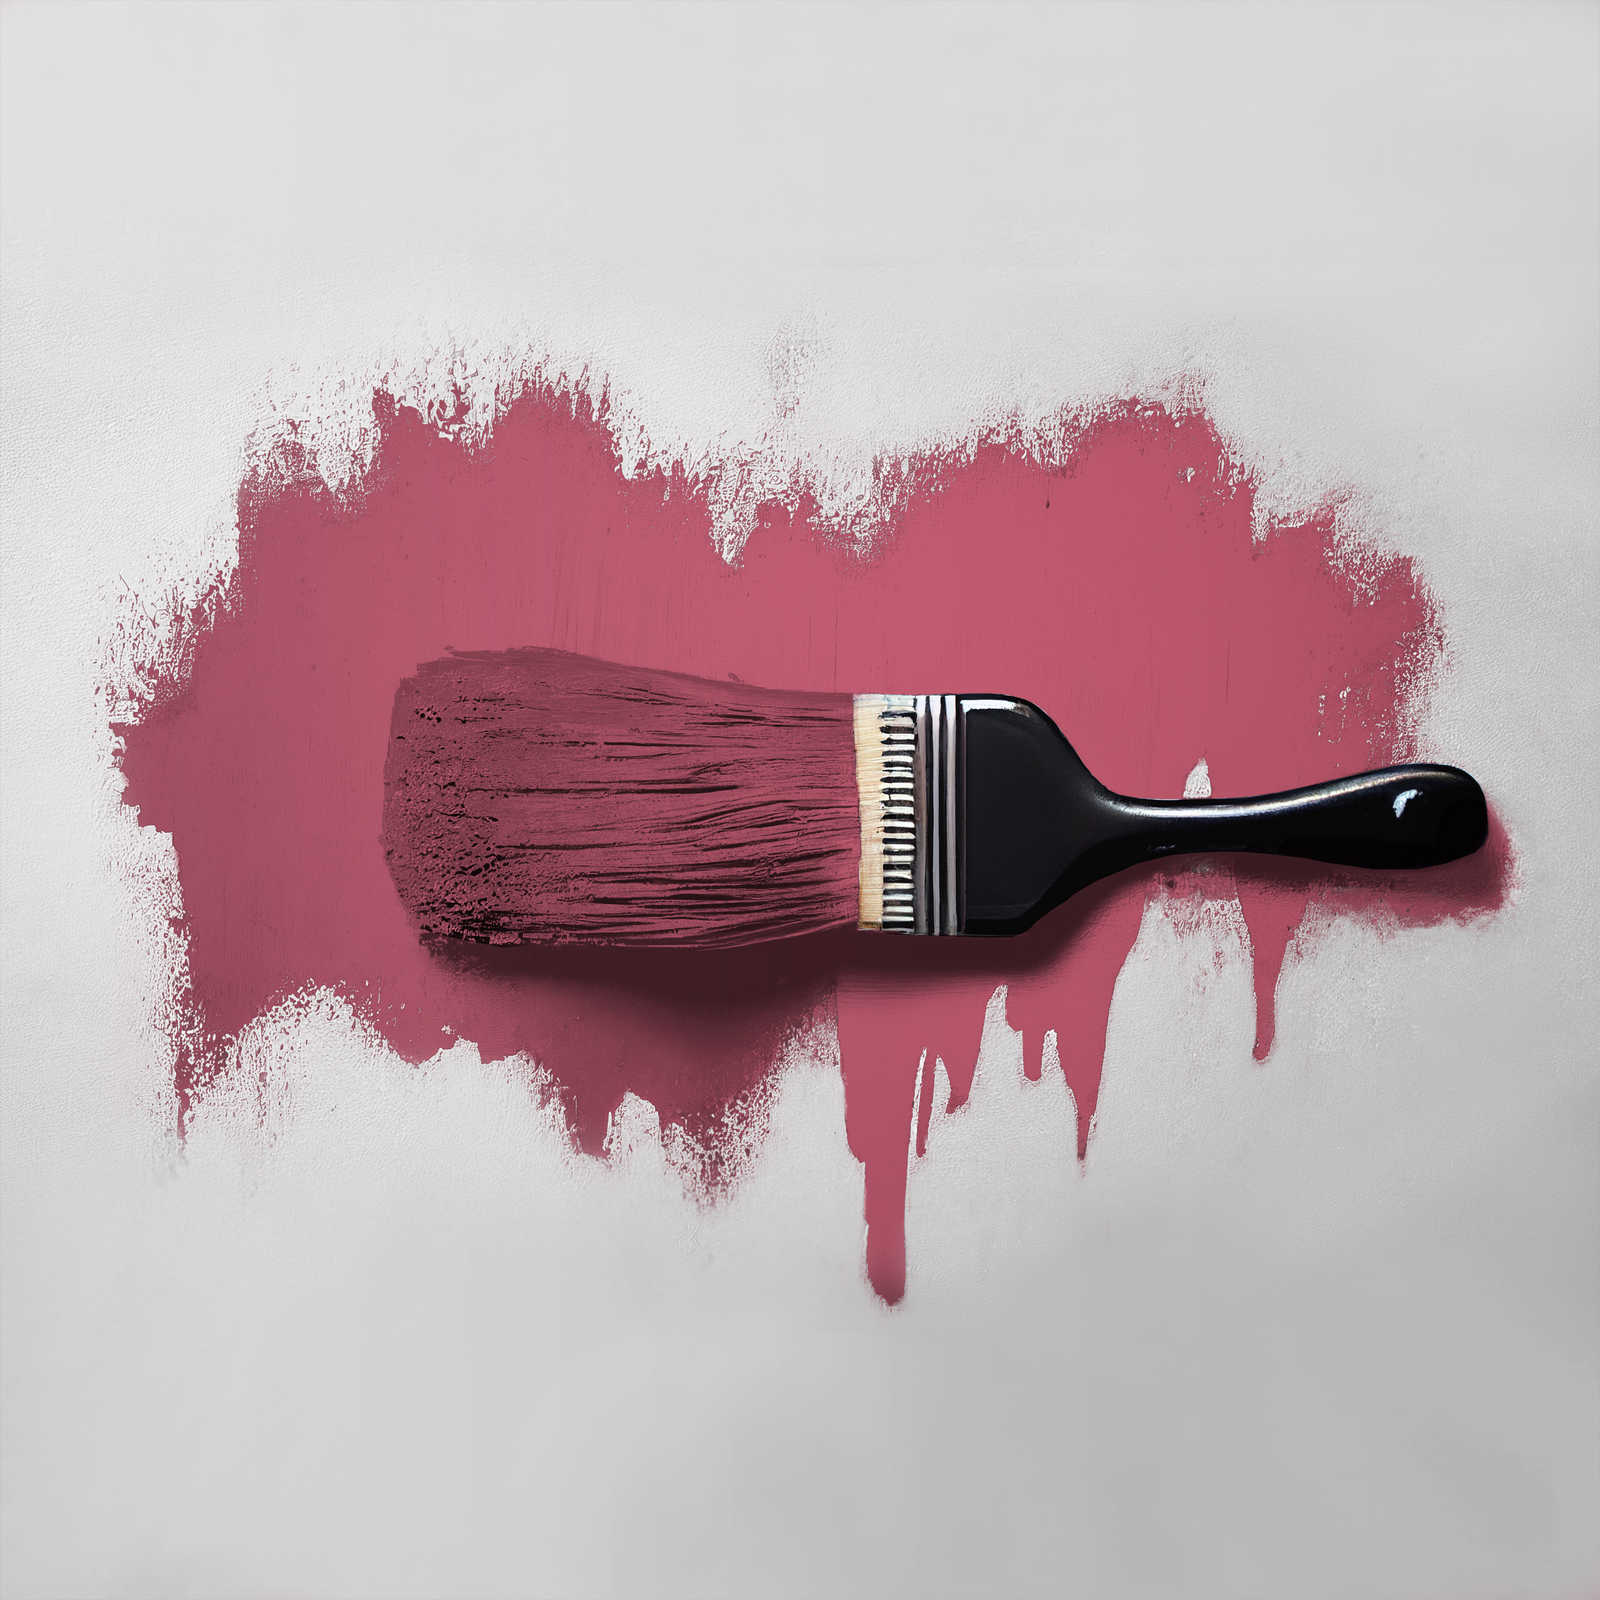             Wandfarbe in intensivem Dunkelrosa »Rosy Raspberry« TCK7011 – 2,5 Liter
        